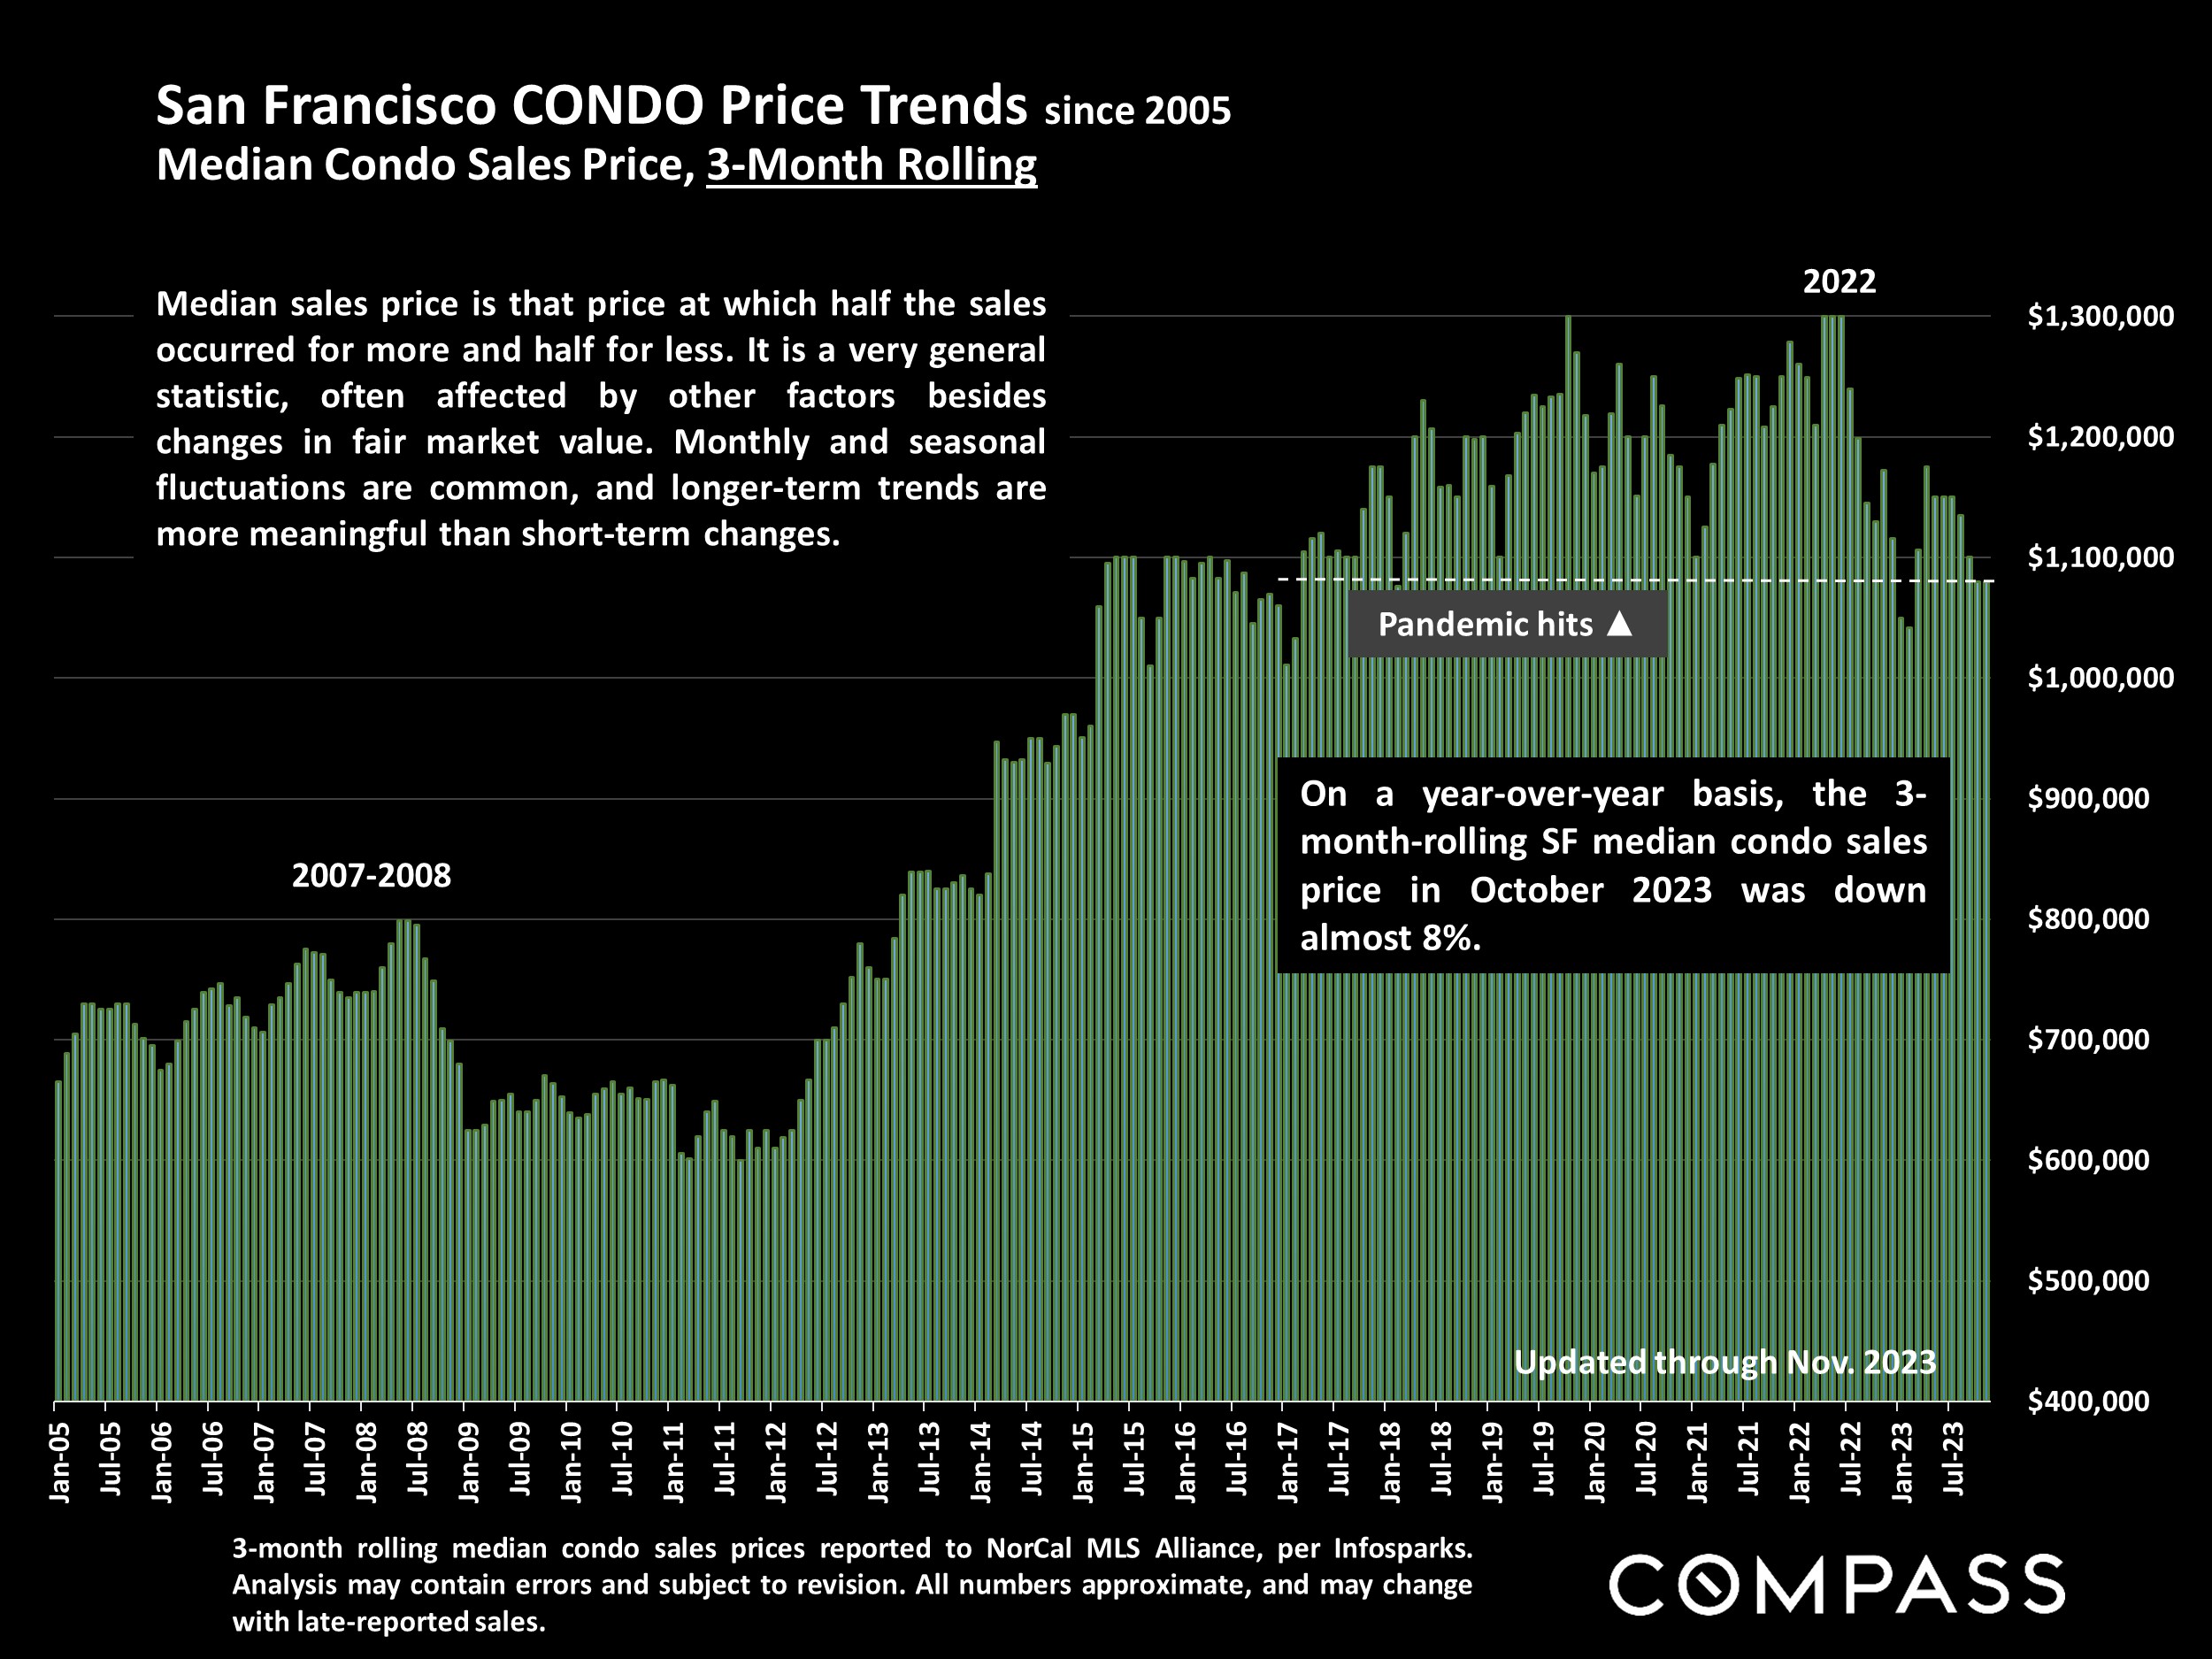 San Francisco CONDO Price Trends since 2005 Median Condo Sales Price, 3-Month Rolling